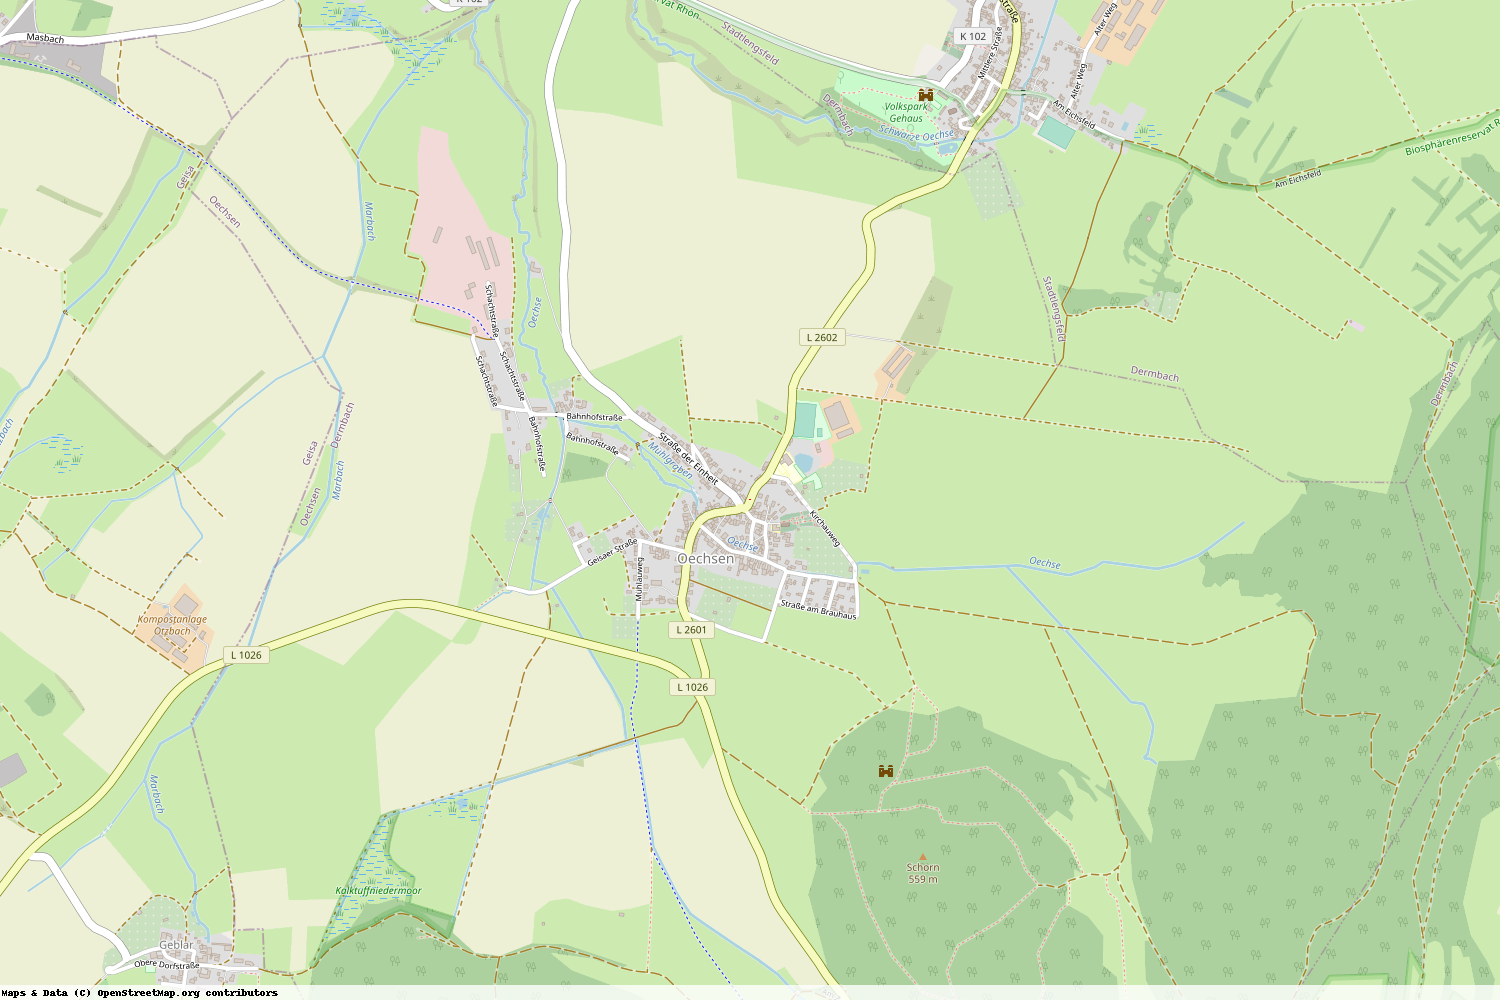 Ist gerade Stromausfall in Thüringen - Wartburgkreis - Oechsen?